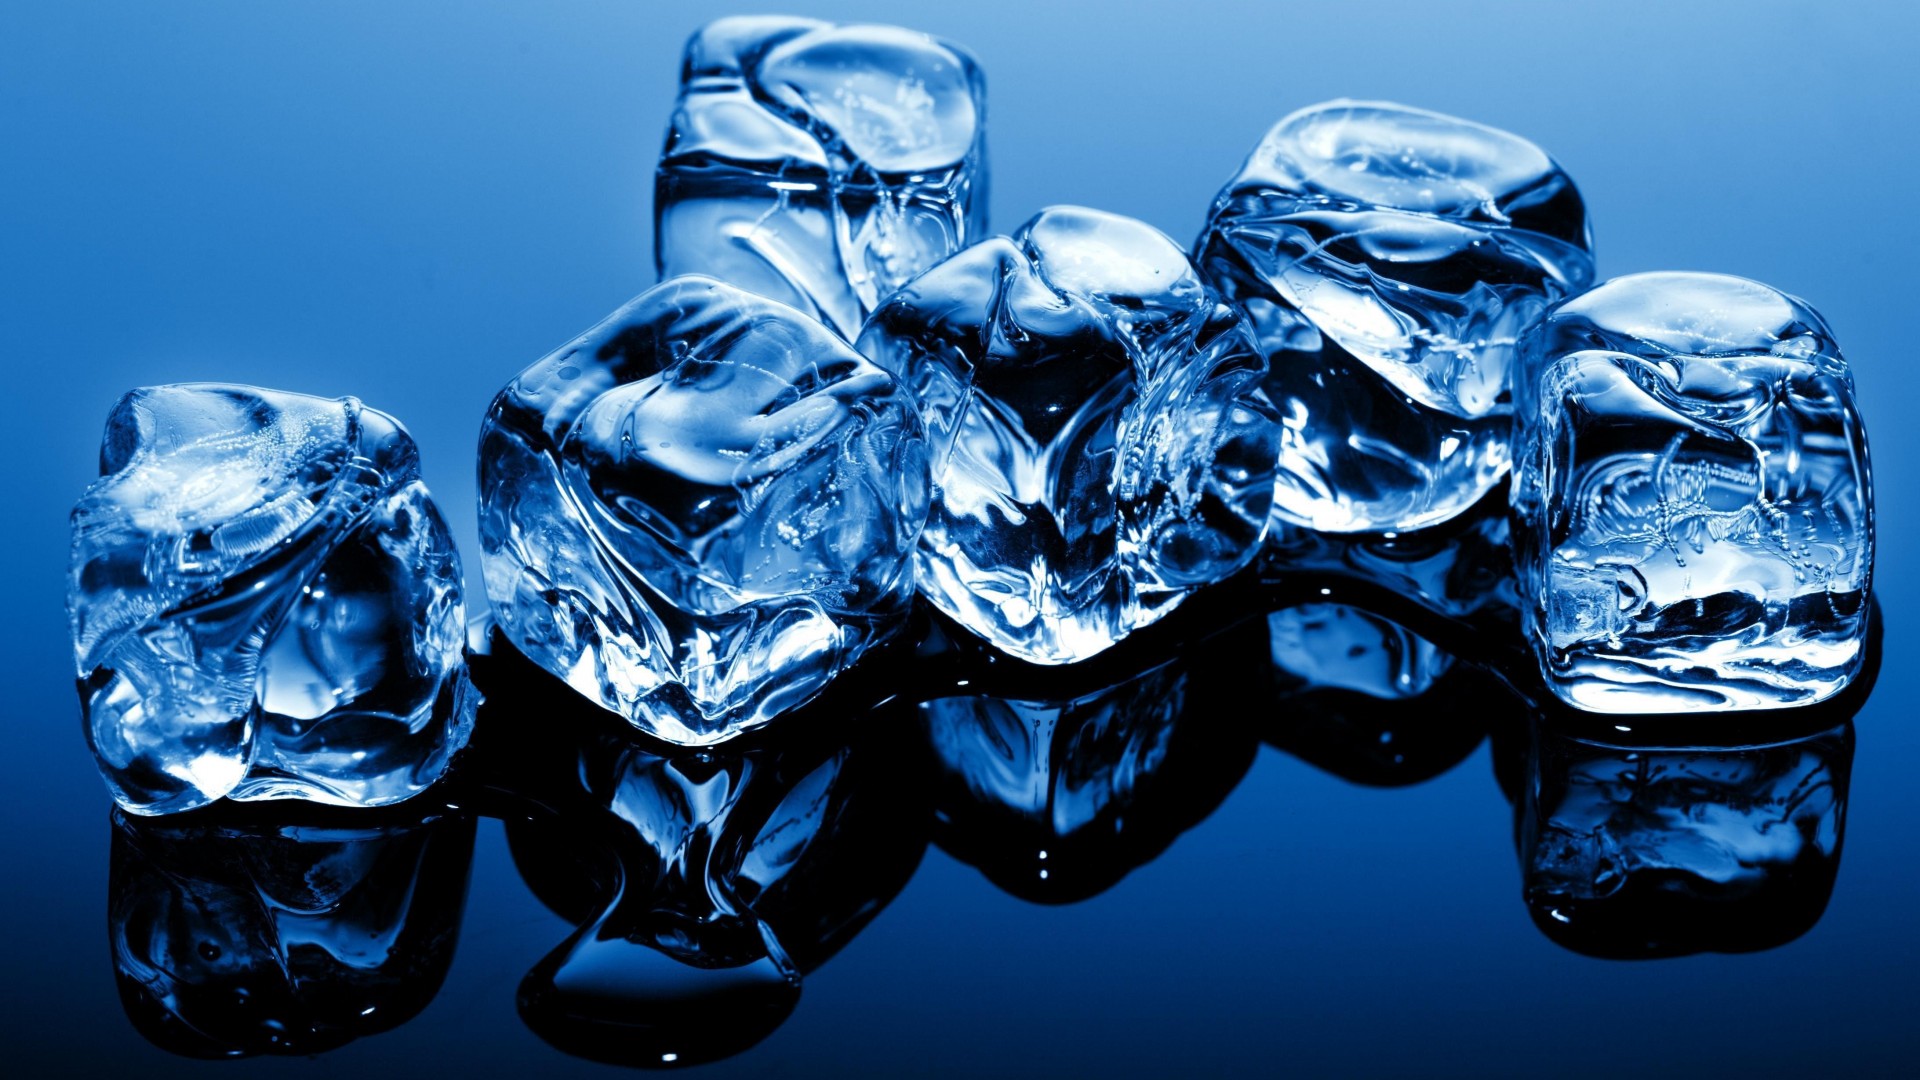 лед, 4k, 5k, кубики, замерзшие, ice, 4k, 5k wallpaper, cubes, blue, frozen, water, background (horizontal)